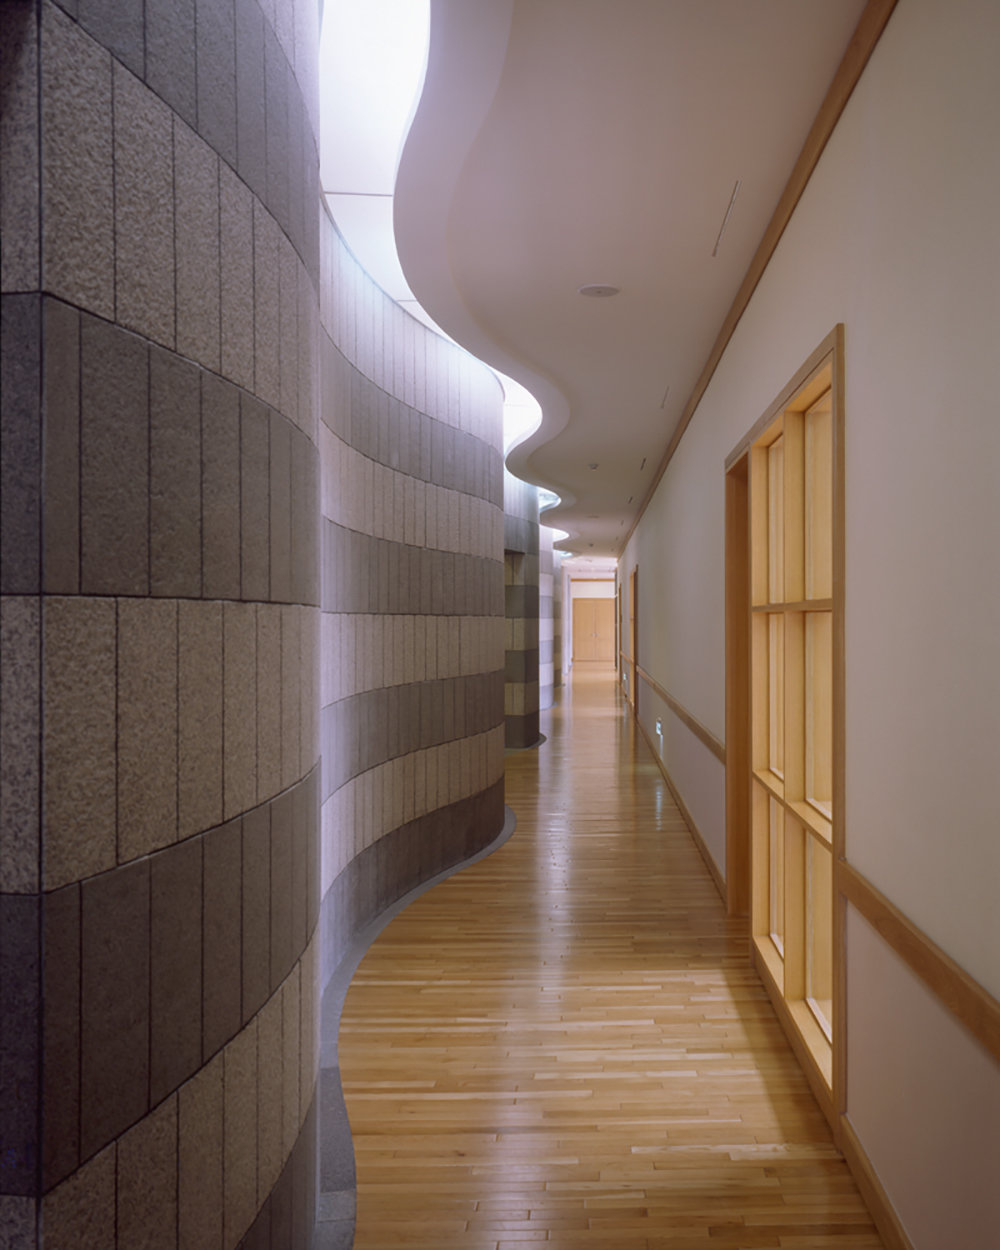 8 tskp kookmin insurance company corporate training center interior detail wavy walls hallway and ceiling design natural lighting 1400 0x0x1000x1250 q85